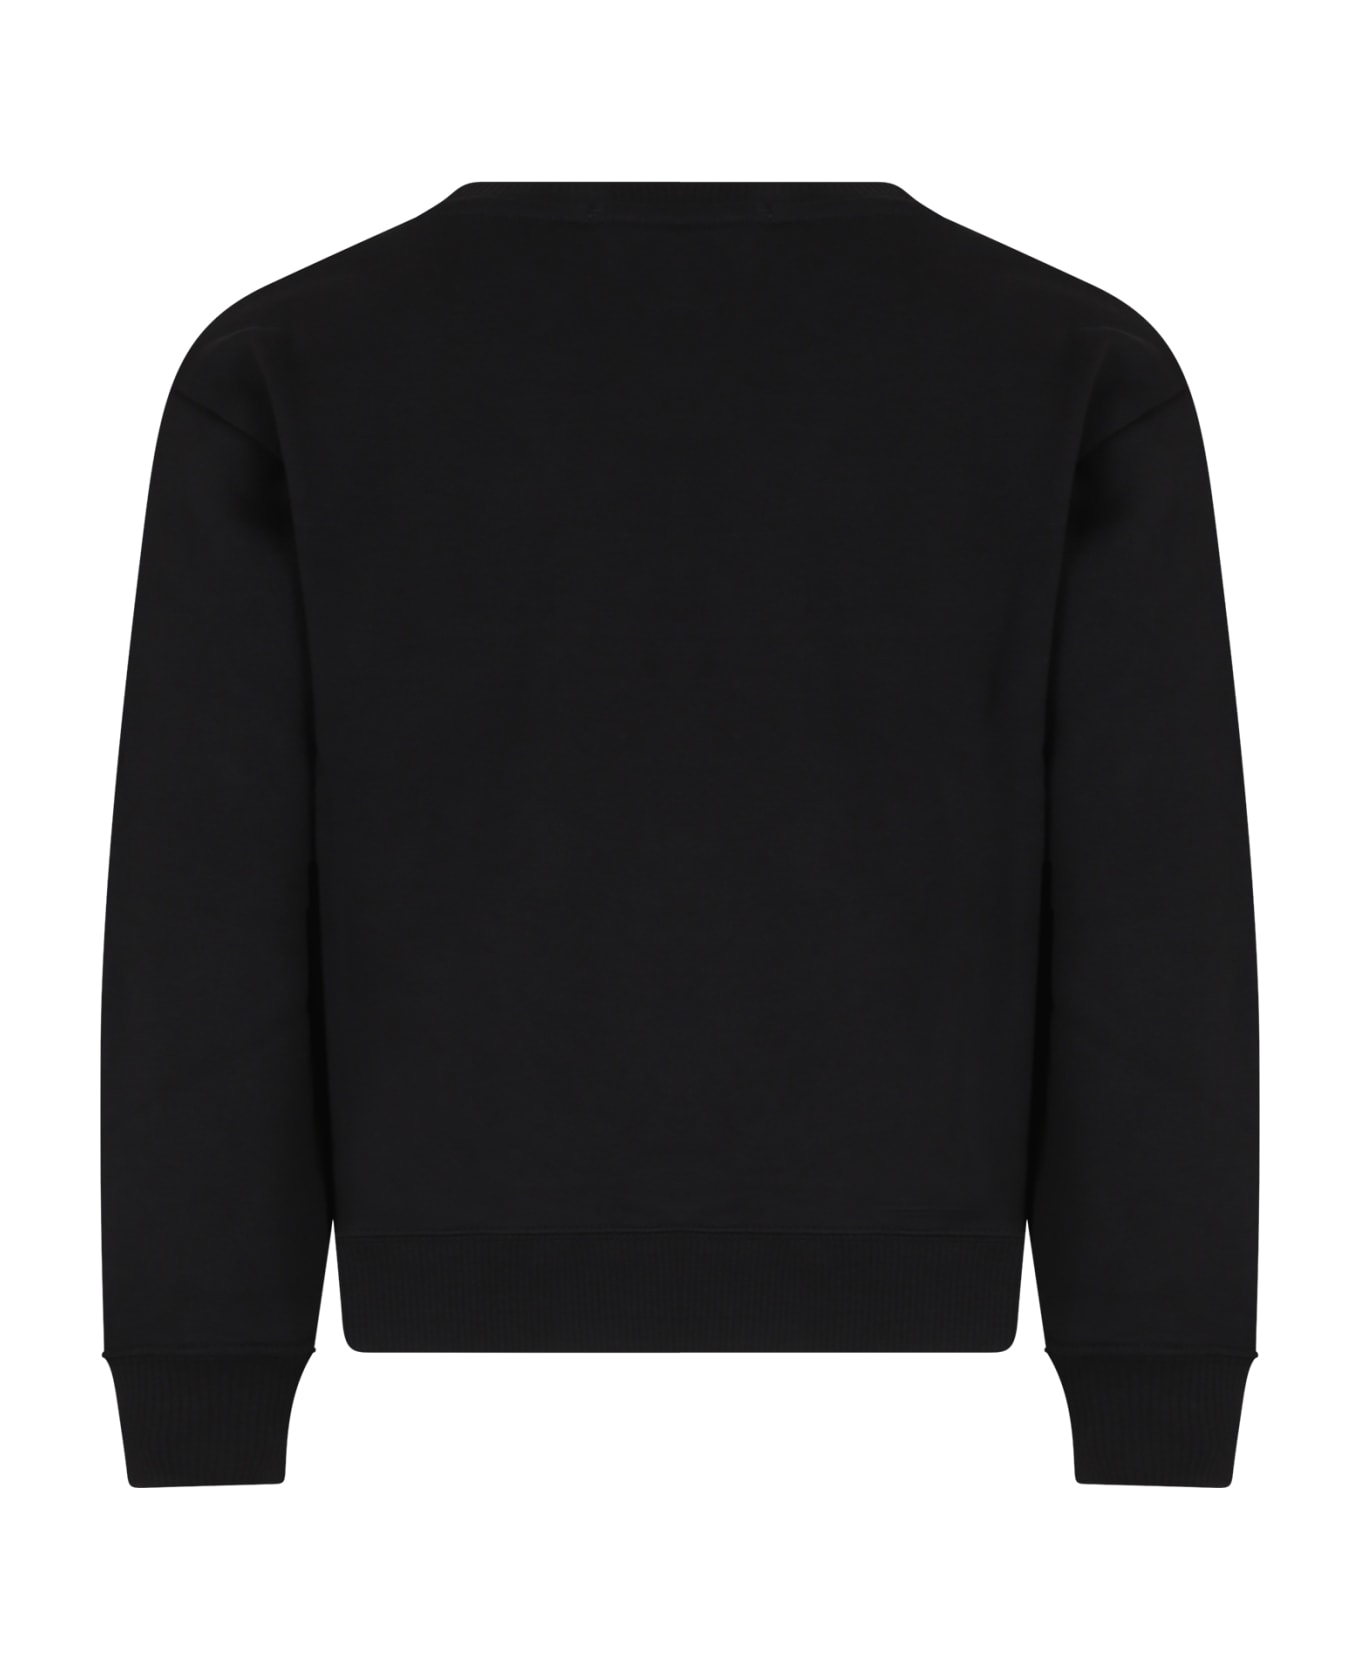 Calvin Klein Black Sweatshirt For Kids With Logo And Print - Black